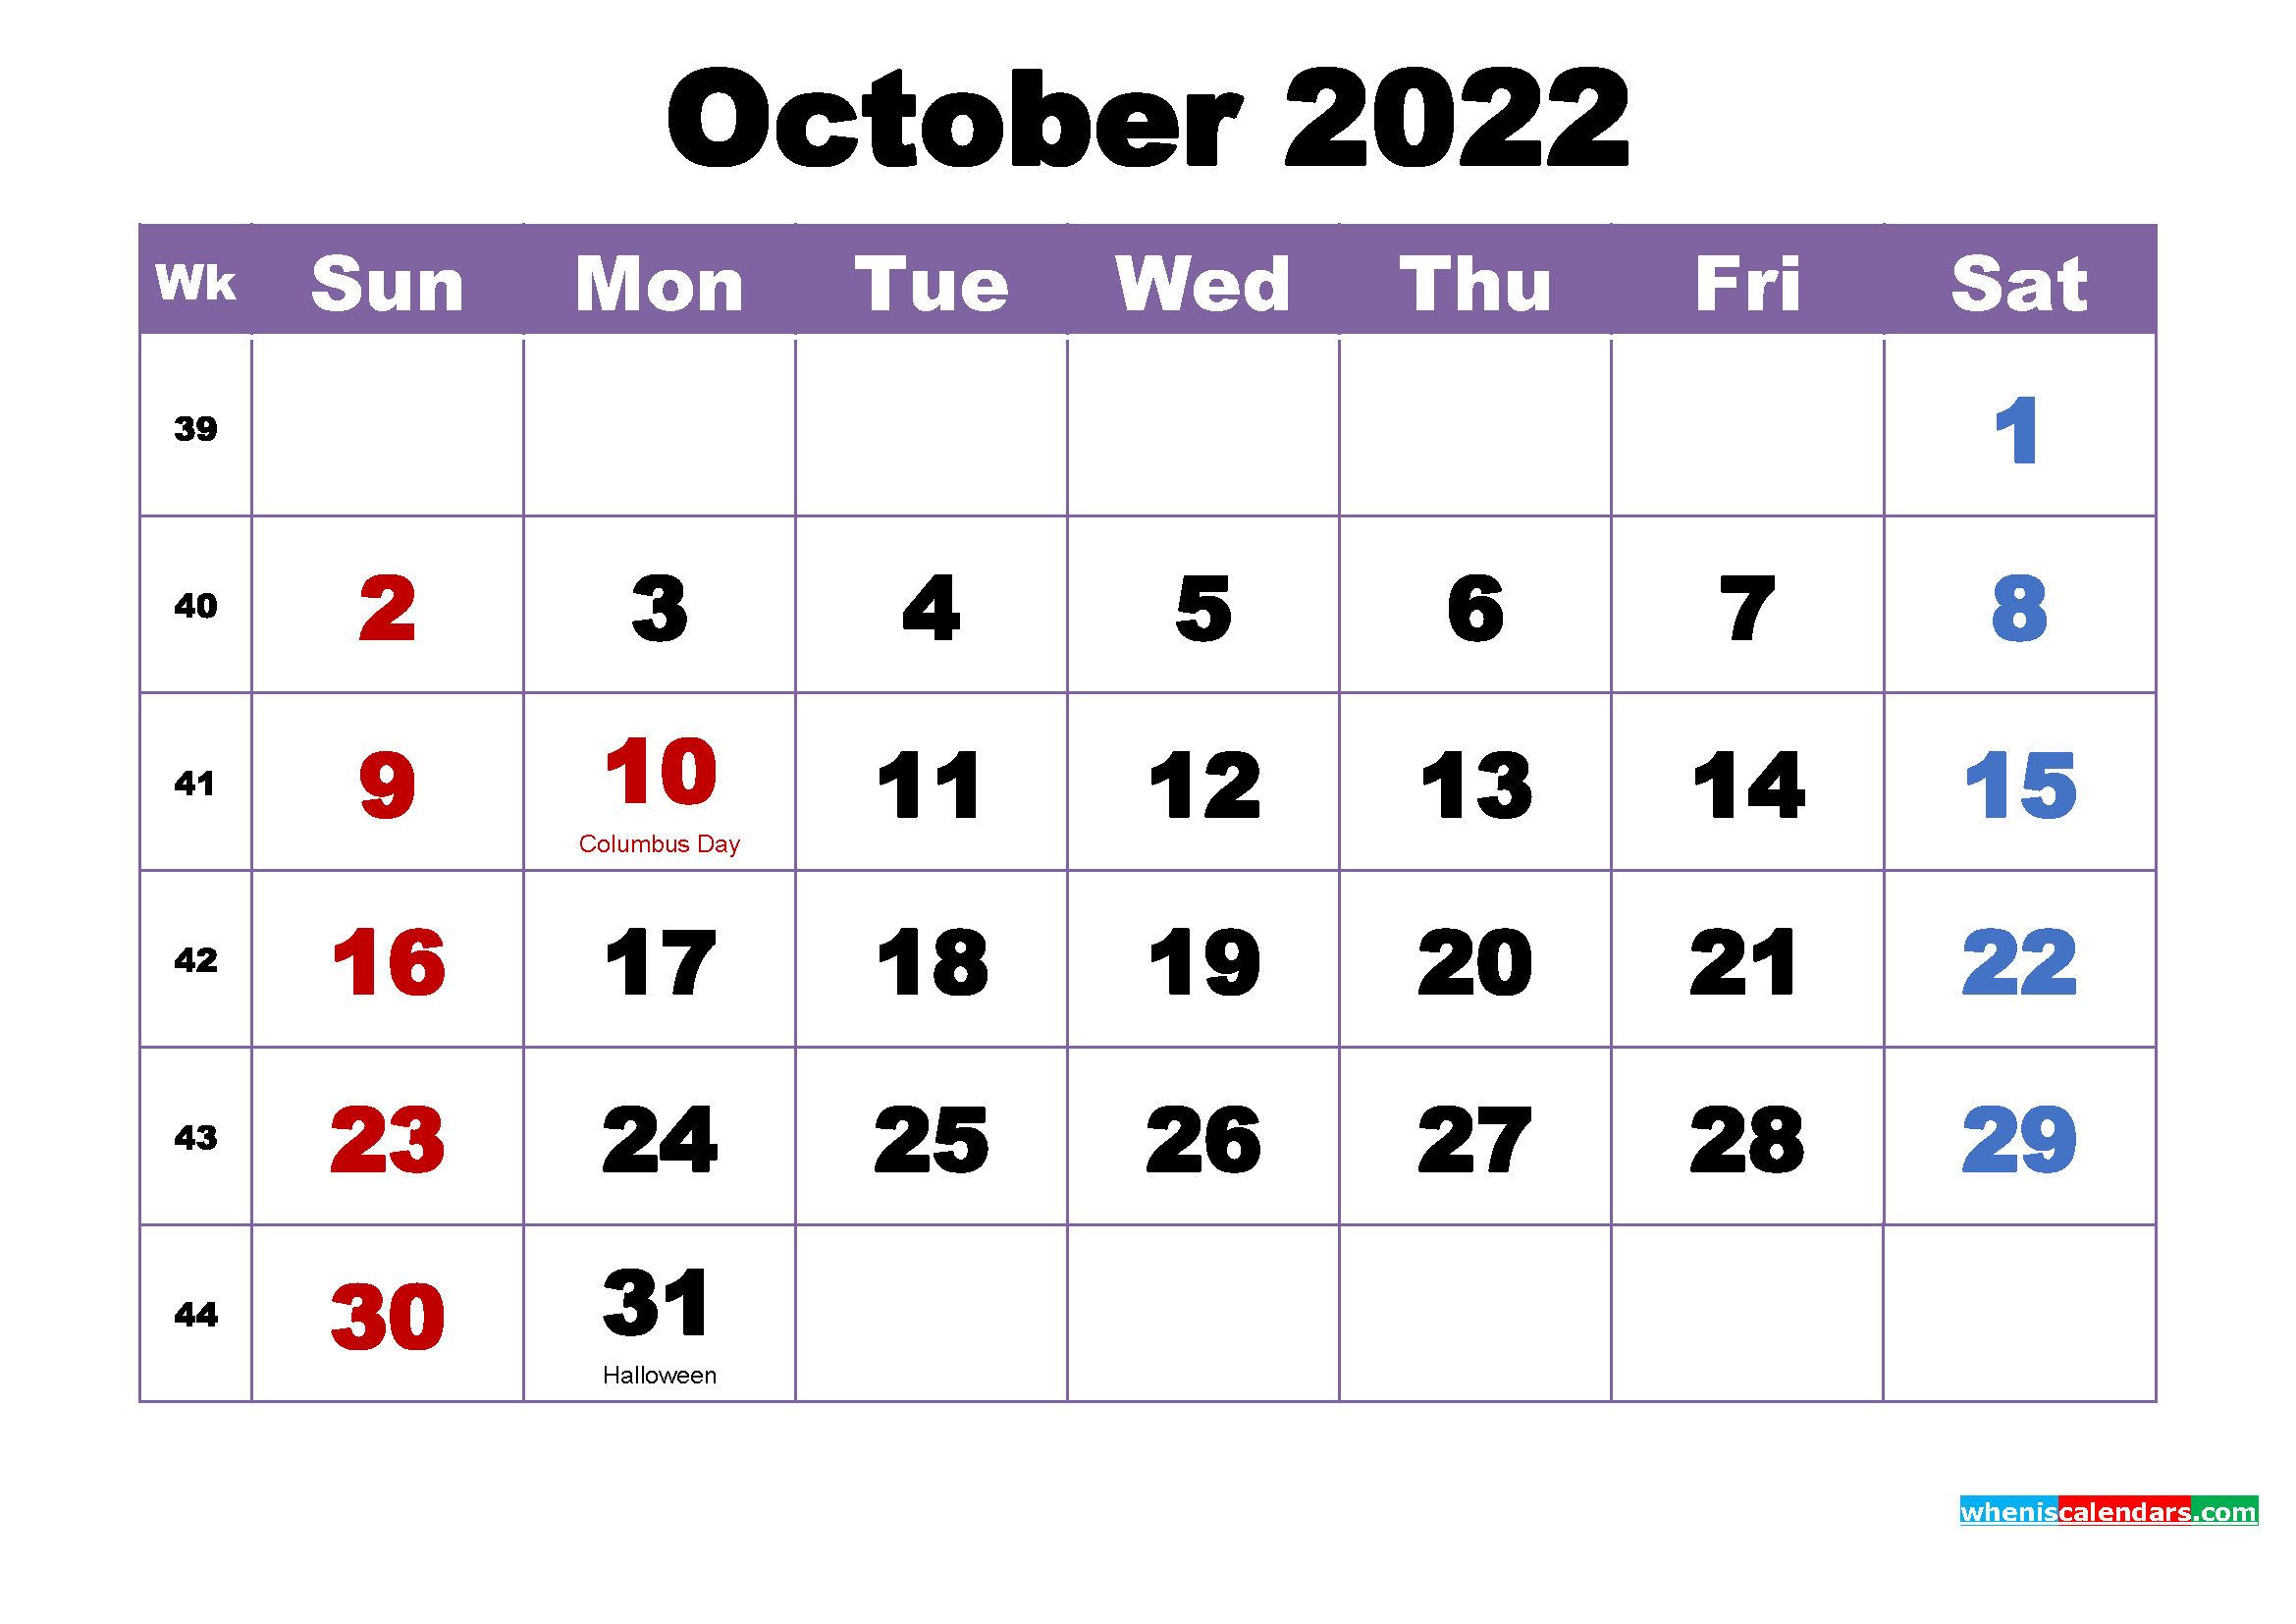 Oct 2022 Calendar With Holidays Free October 2022 Calendar With Holidays Printable